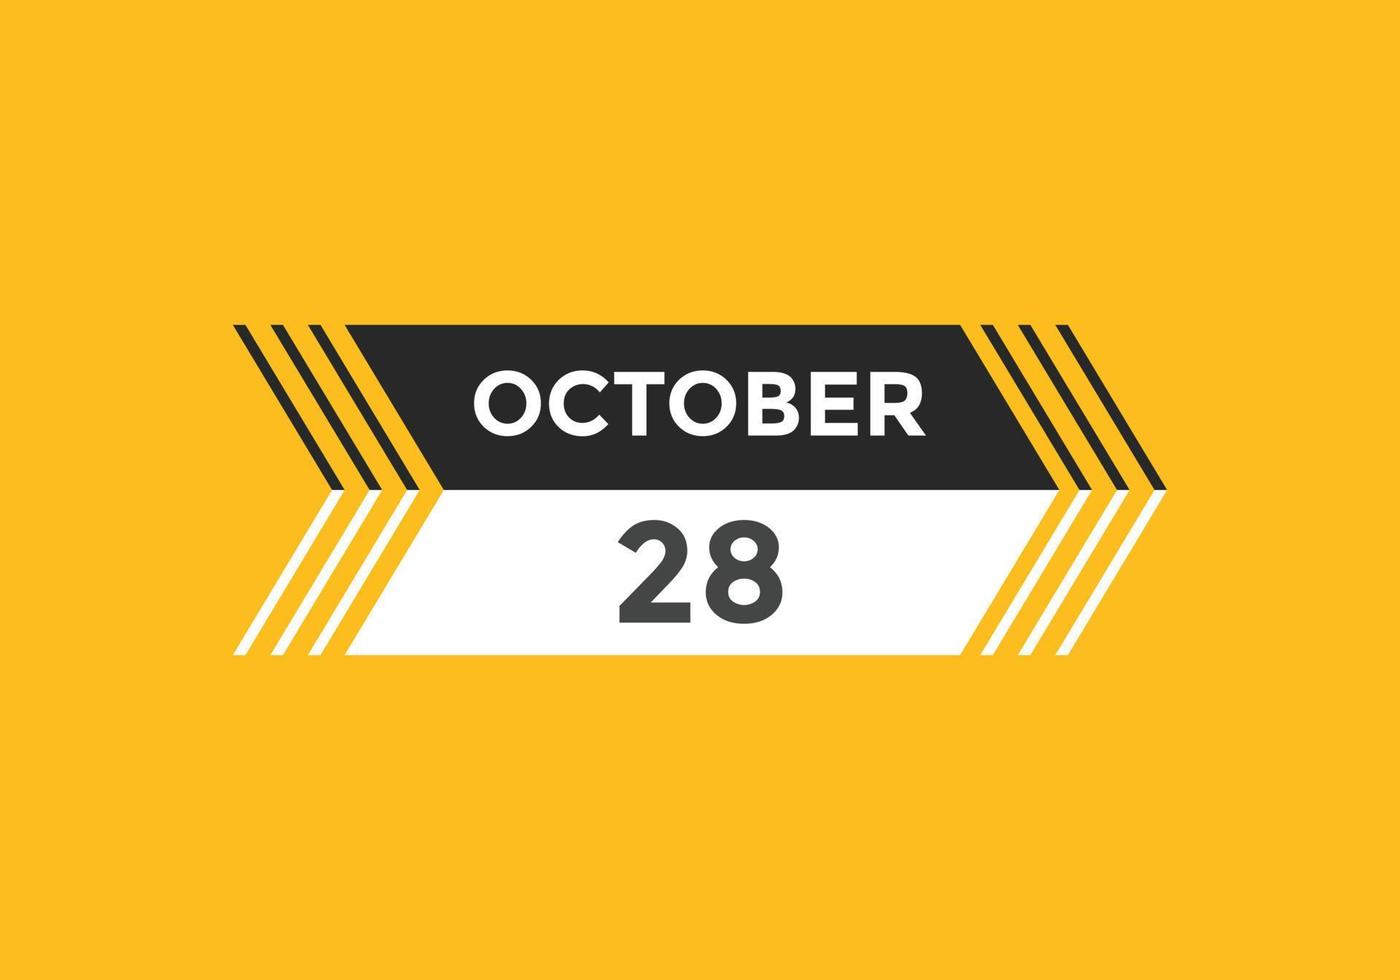 oktober 28 kalender påminnelse. 28: e oktober dagligen kalender ikon mall. kalender 28: e oktober ikon design mall. vektor illustration